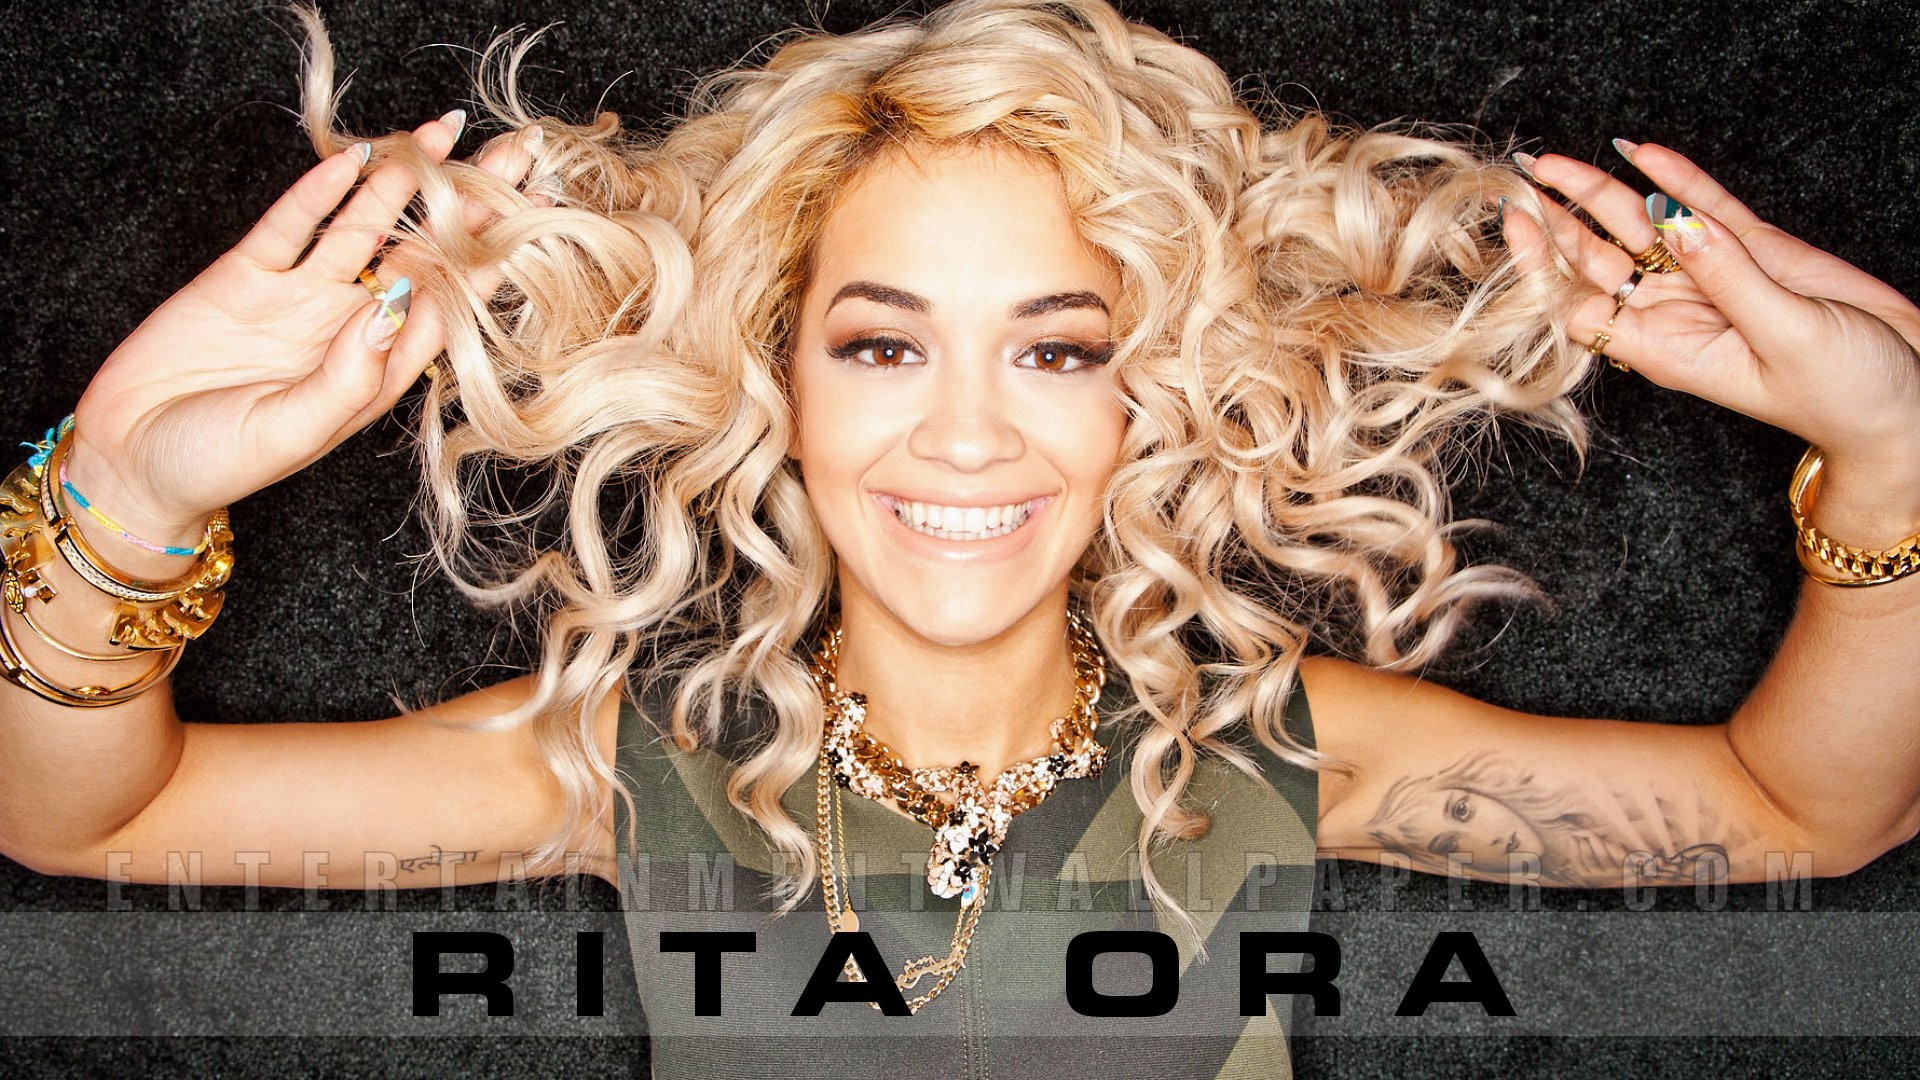 1920x1080 Rita Ora Wallpaper - Original size, download now.